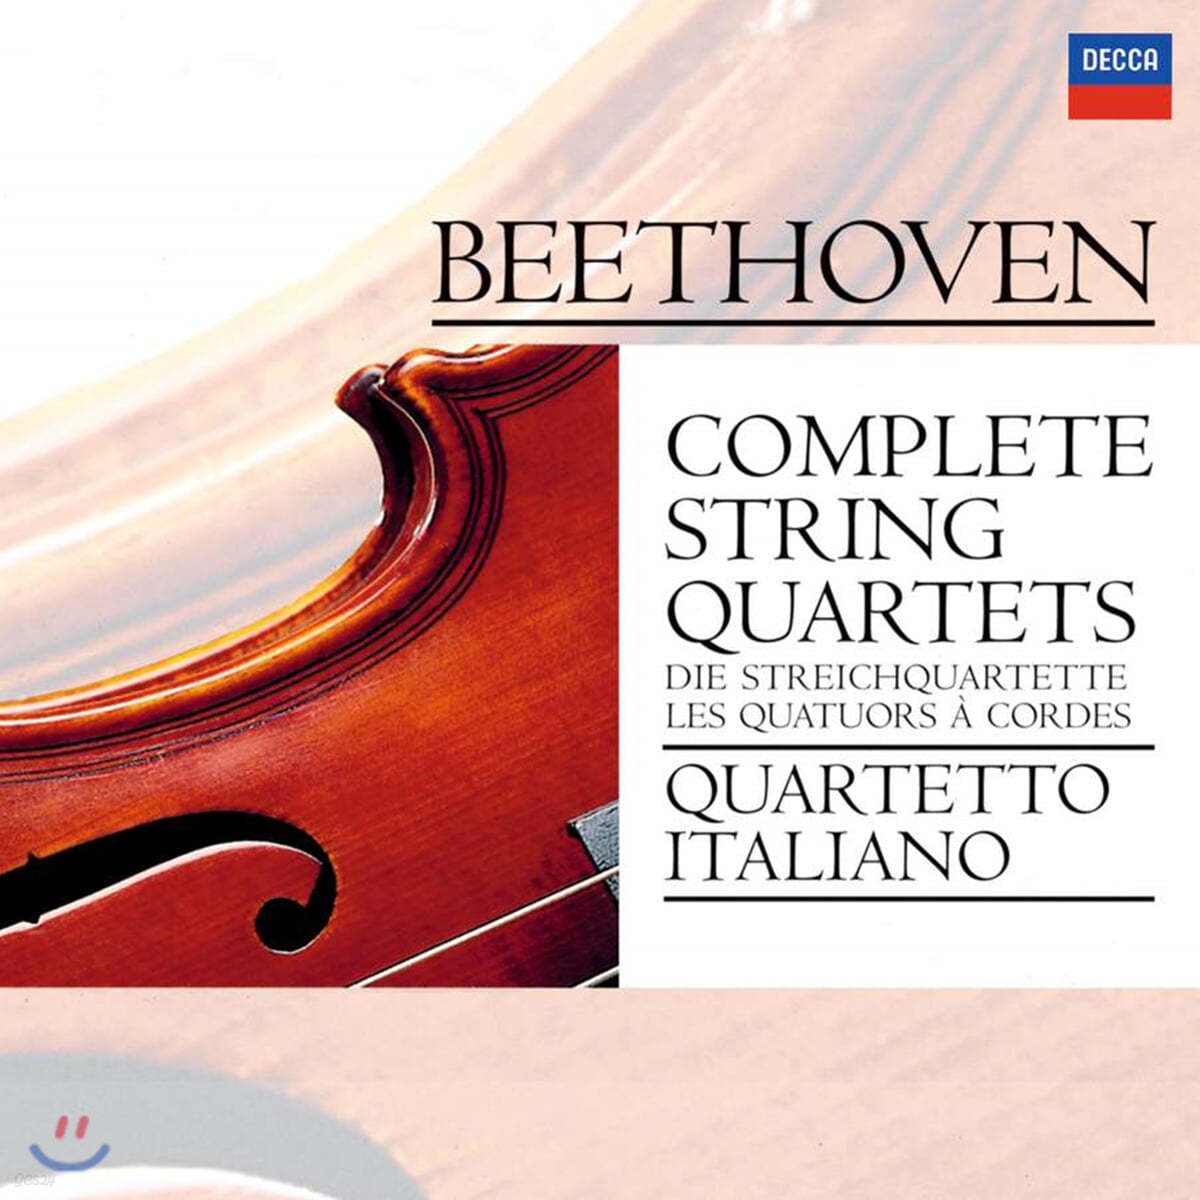 Quartetto Italiano 베토벤: 현악 사중주 전집 (Beethoven: The Complete String Quartets)